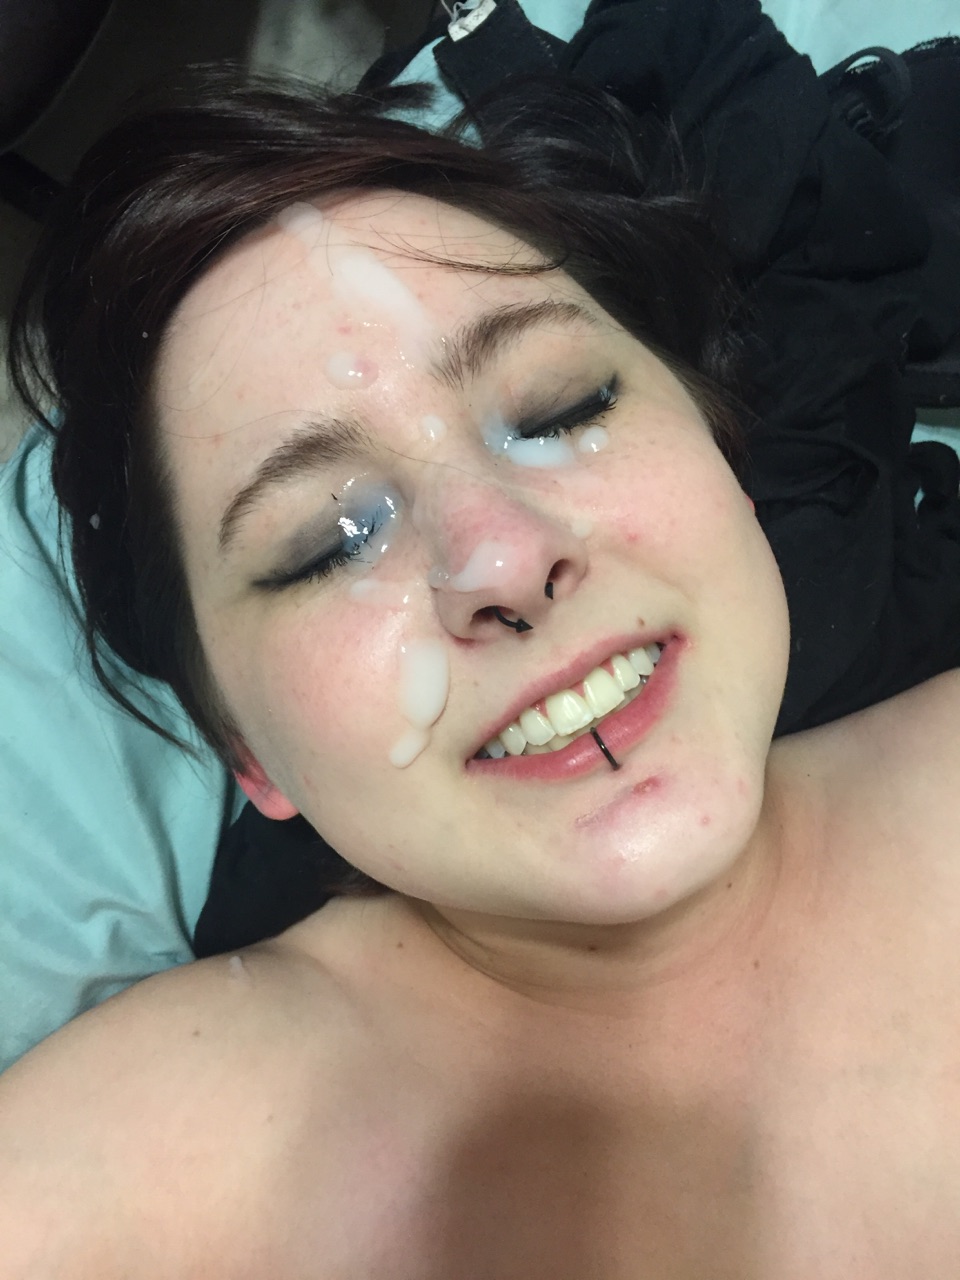 Goth girl get facial Porn